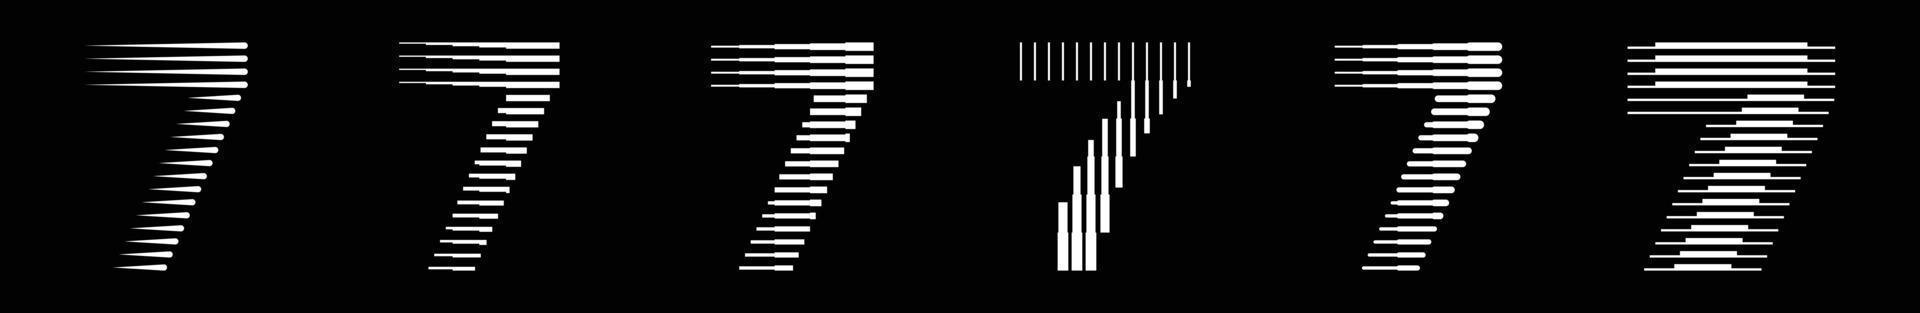 Set numbers seven 7 logo lines abstract modern art vector illustration